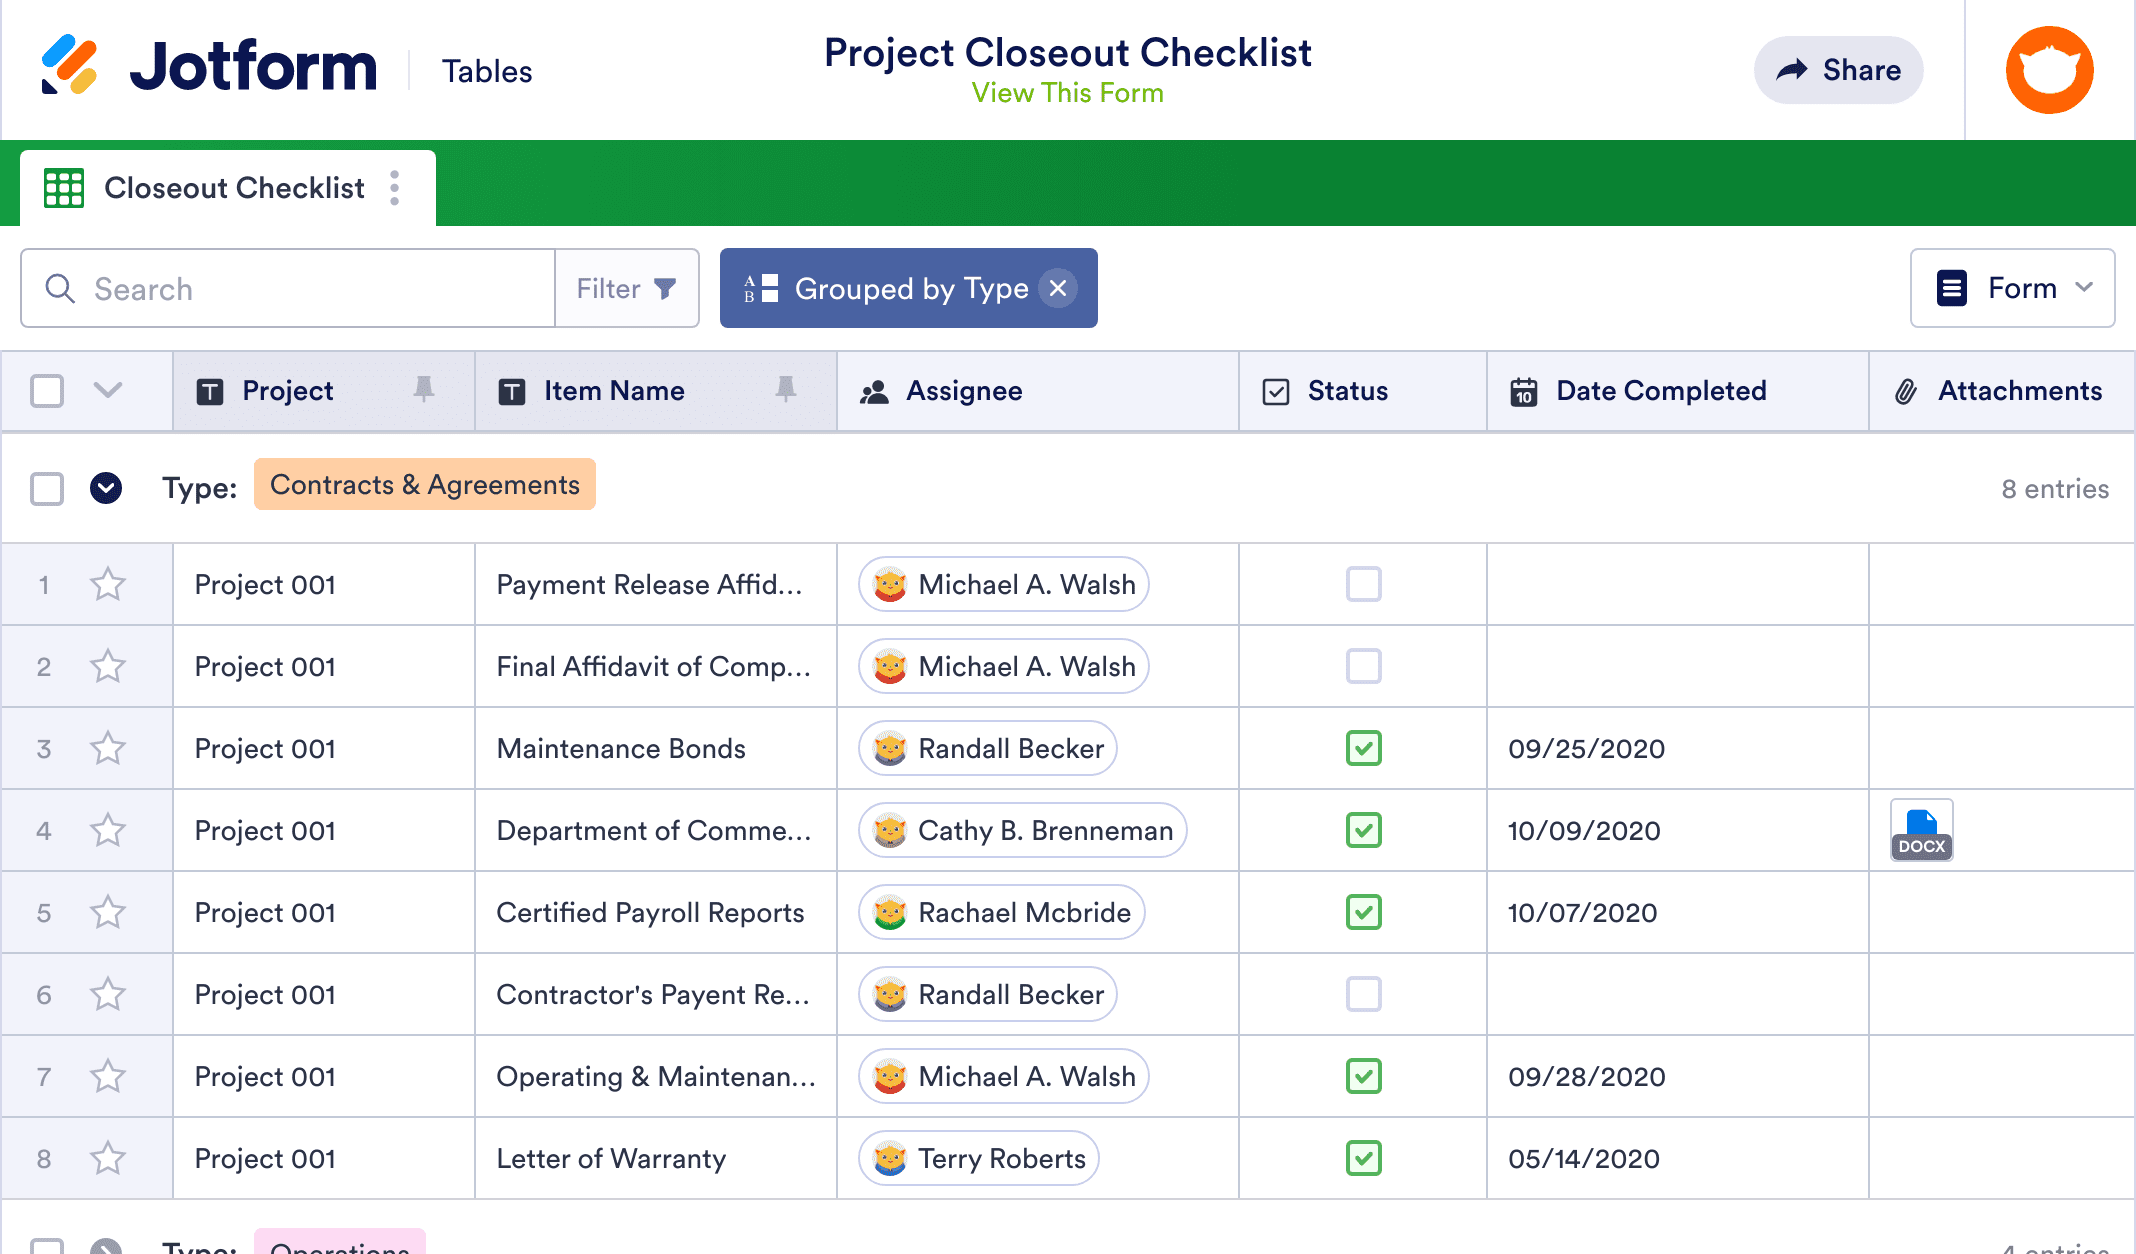 Project Closeout Checklist